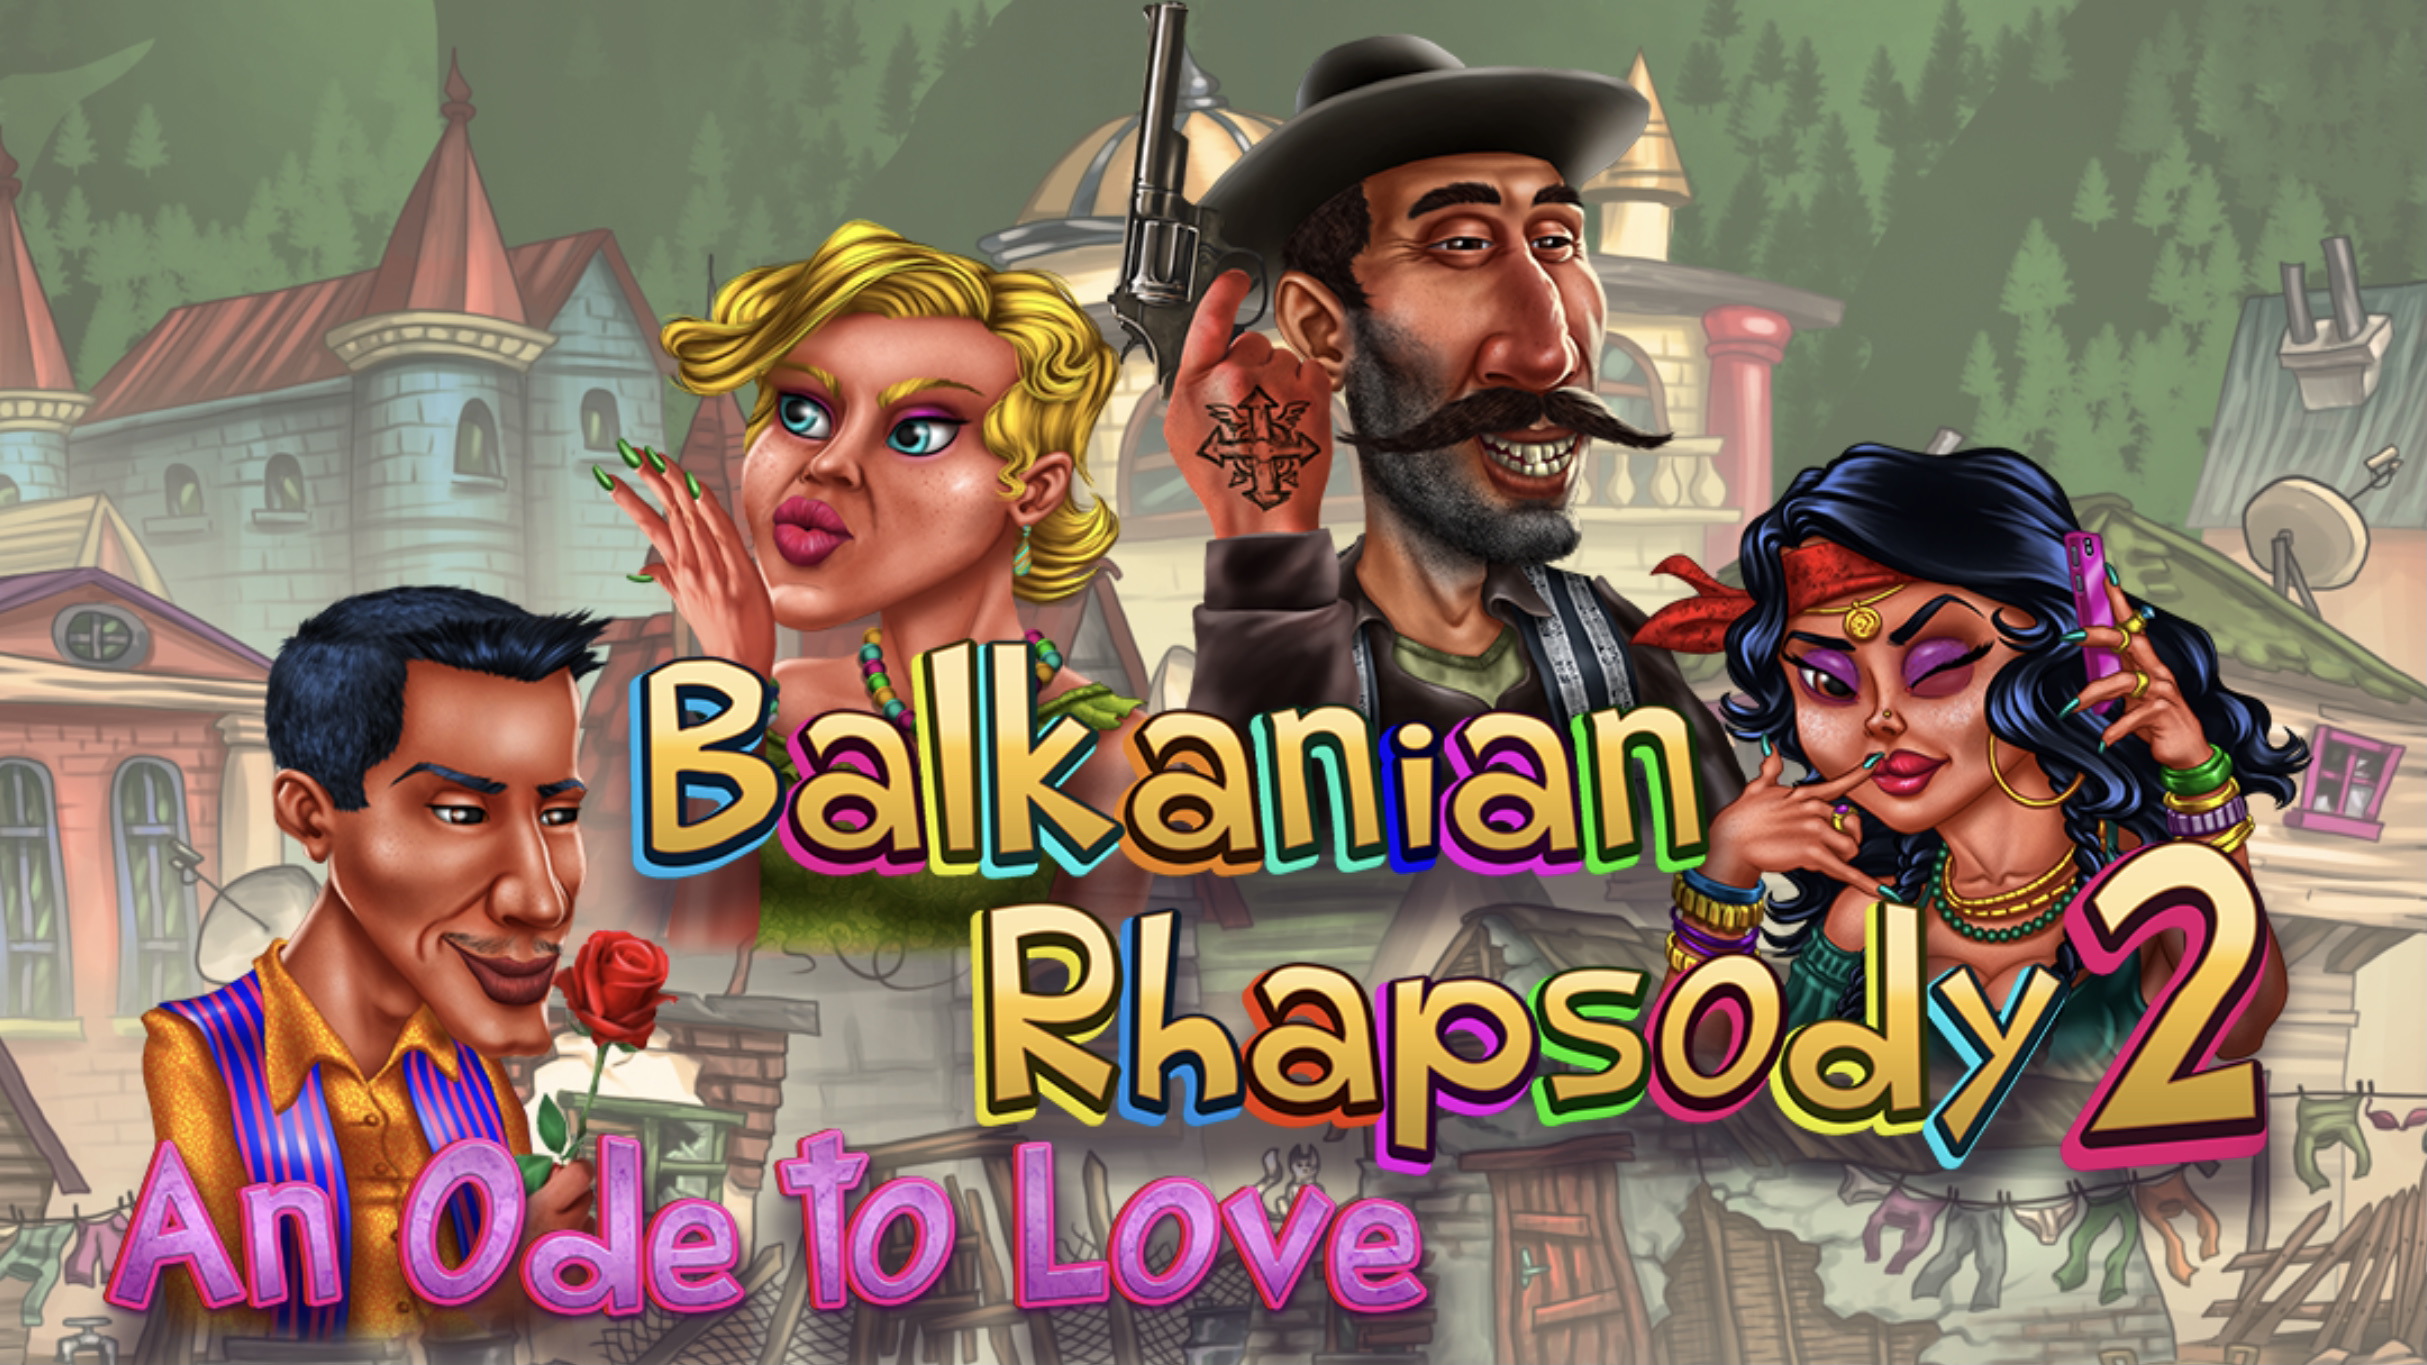 Balkanian Rhapsody 2 - An Ode To Love